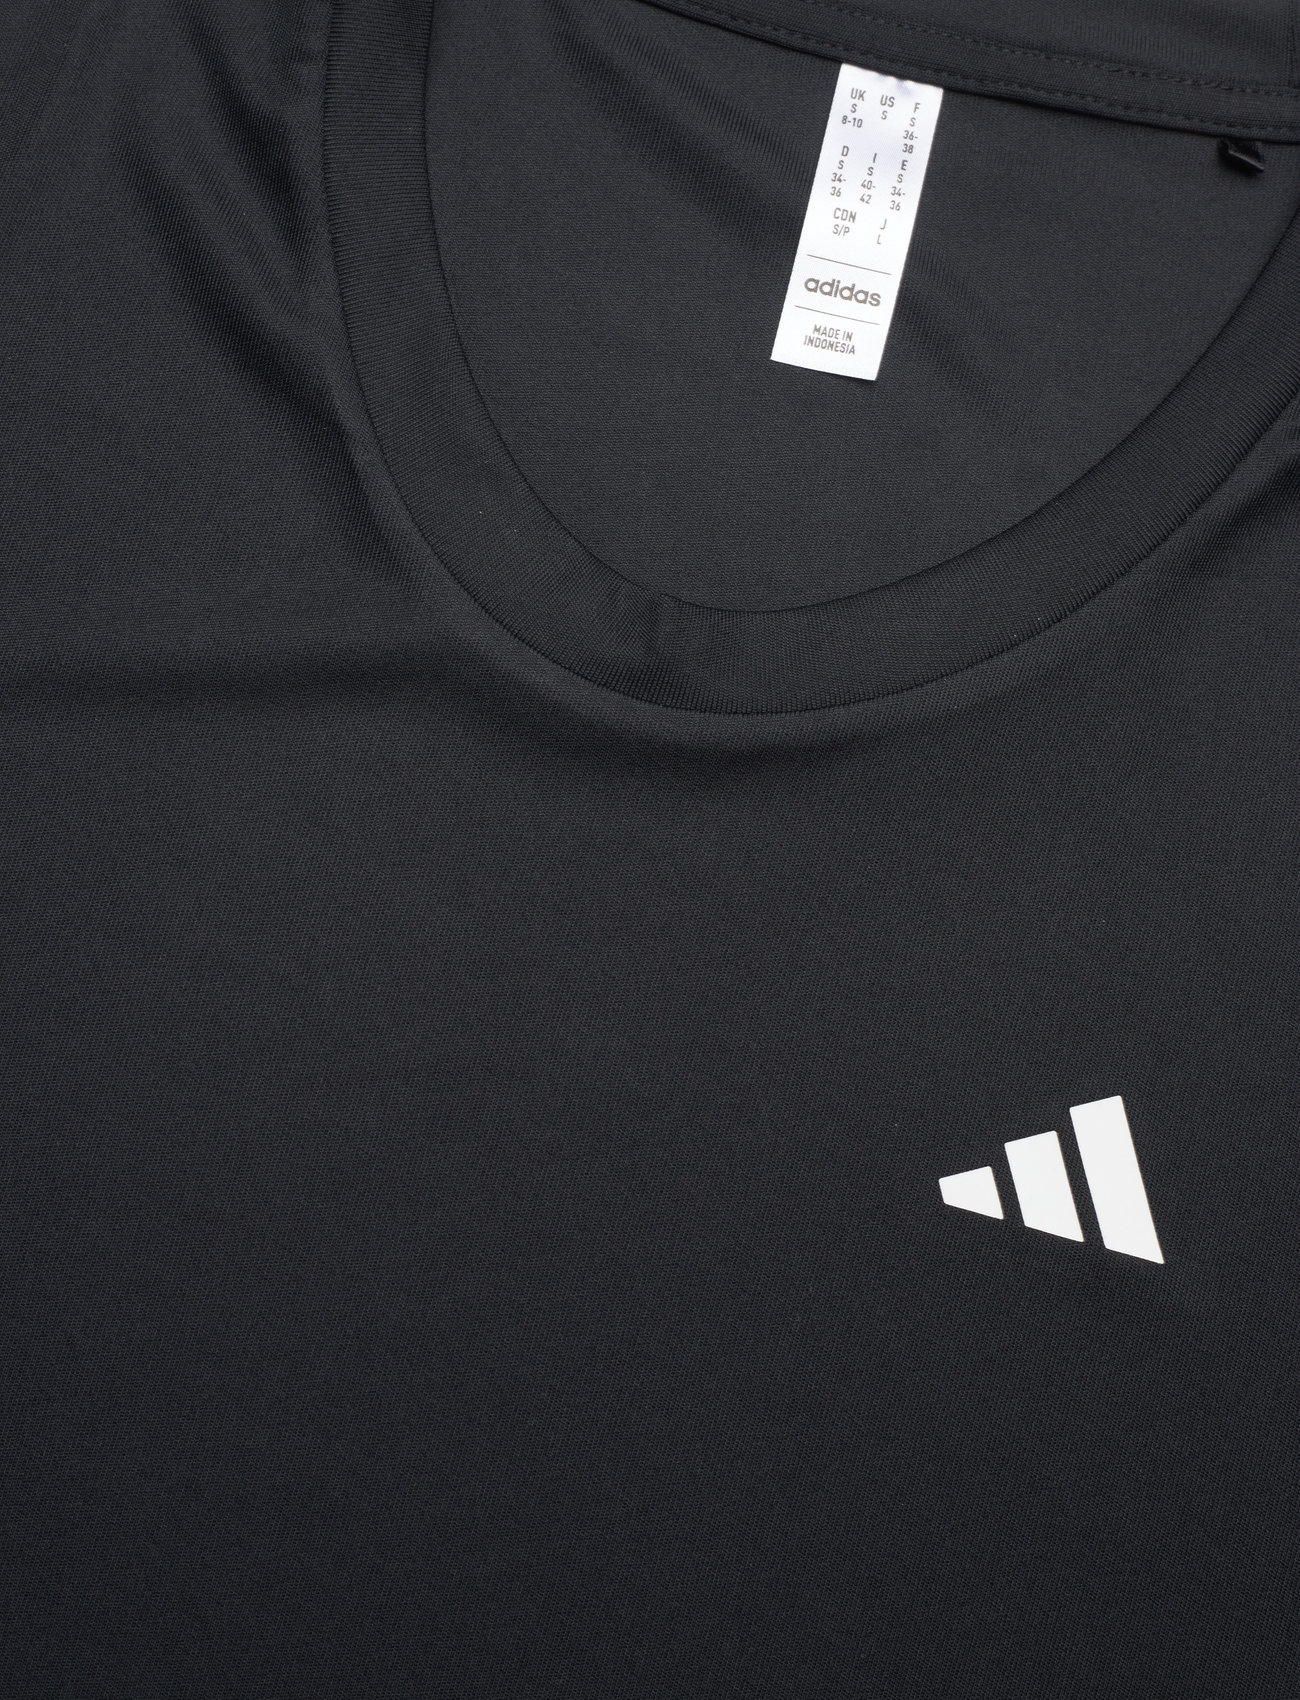 adidas Performance - Own the Run T-Shirt - t-shirts - black - 1